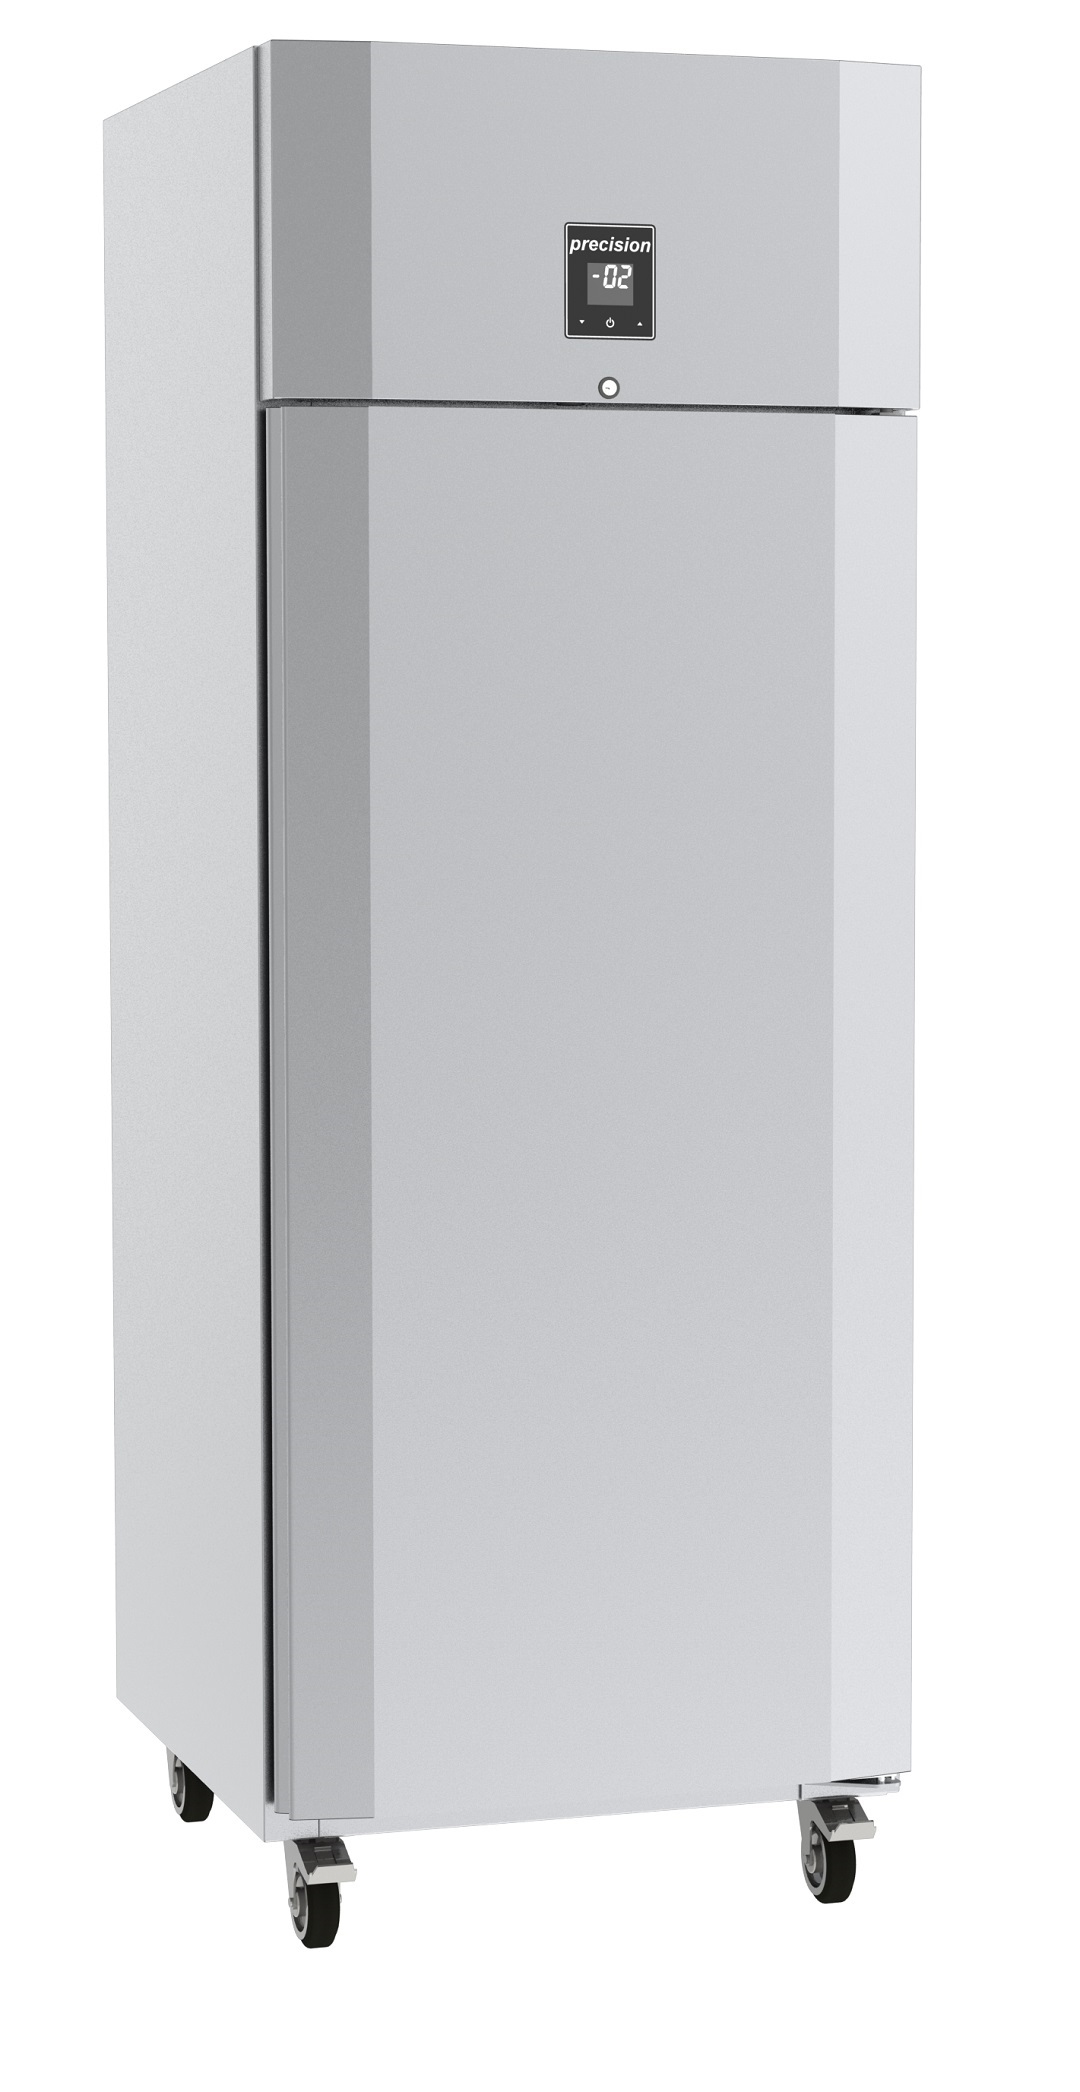 Precision LPT 601 SS Upright Gastronorm Freezer